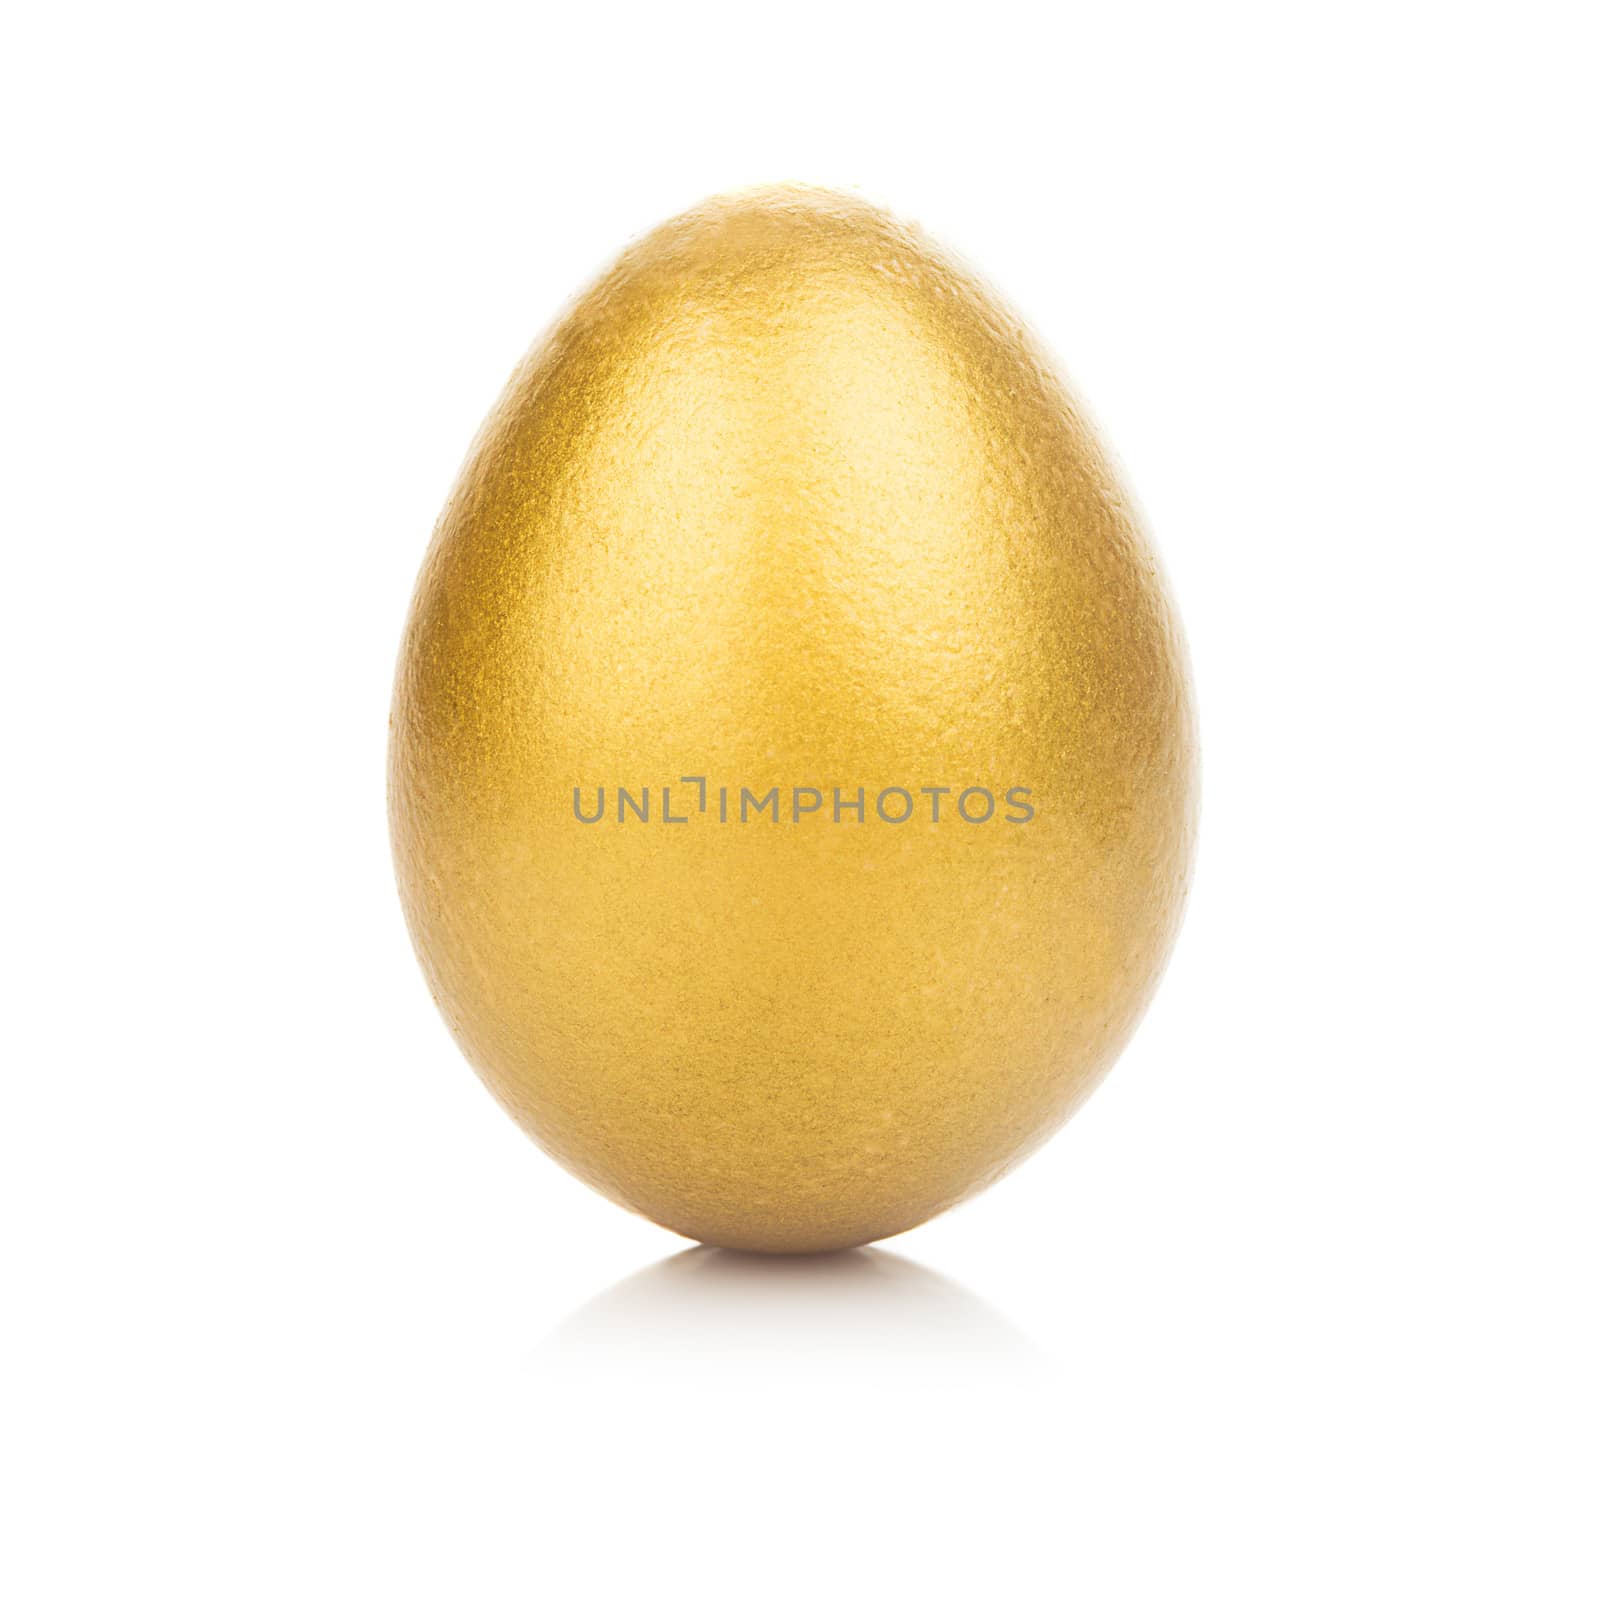 One golden egg isolated on white background